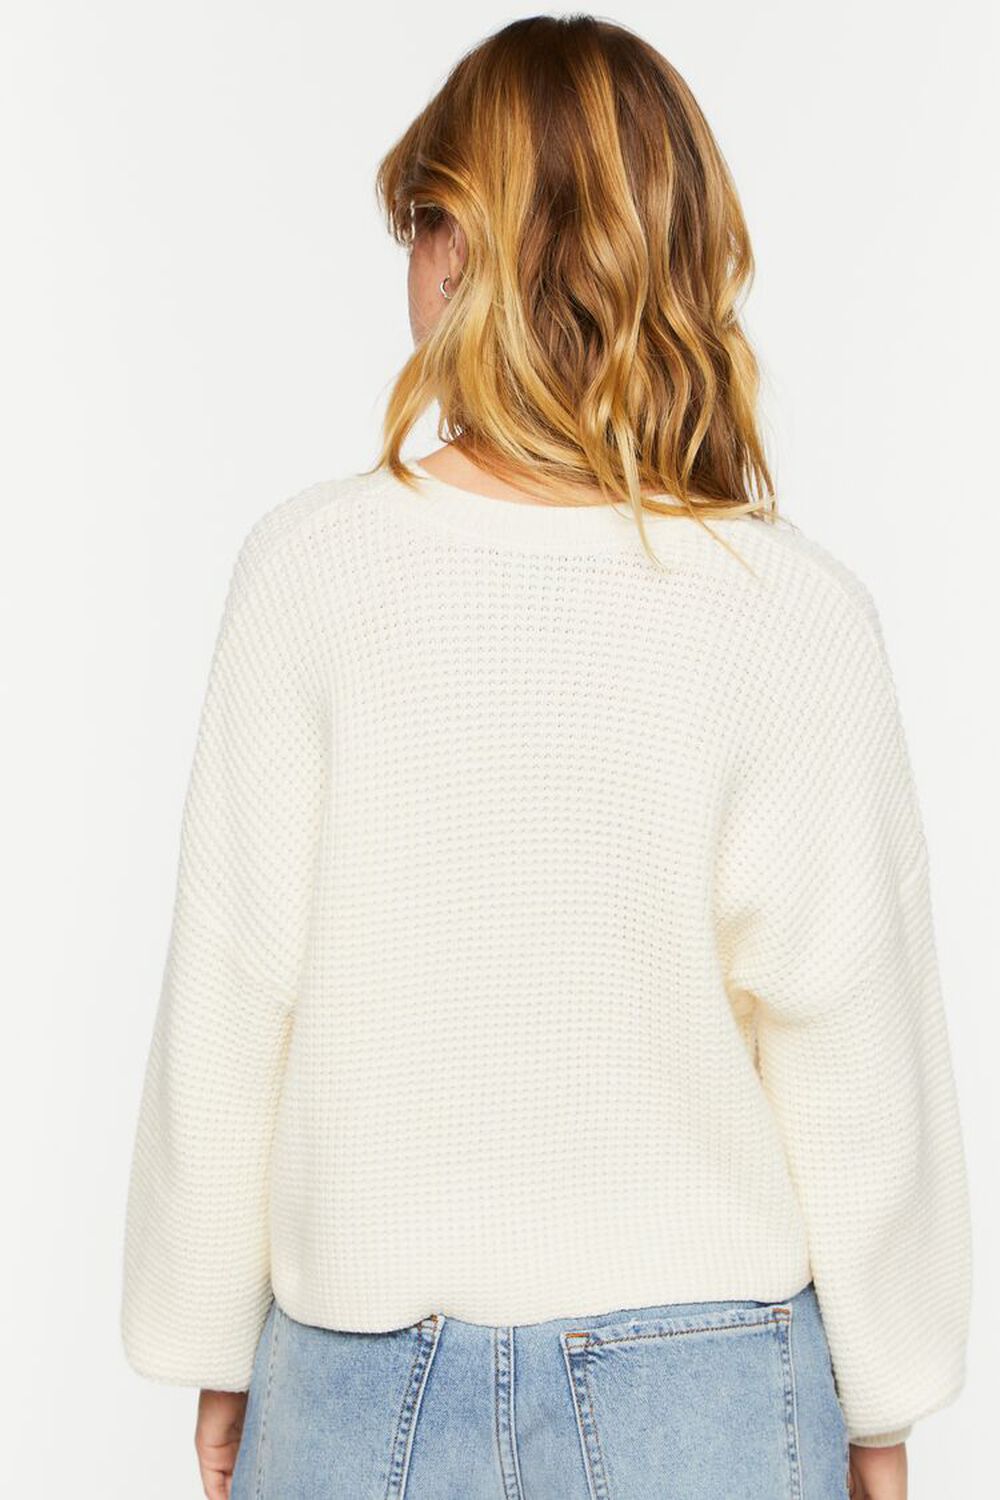 VANILLA Purl Knit Long-Sleeve Sweater, image 3